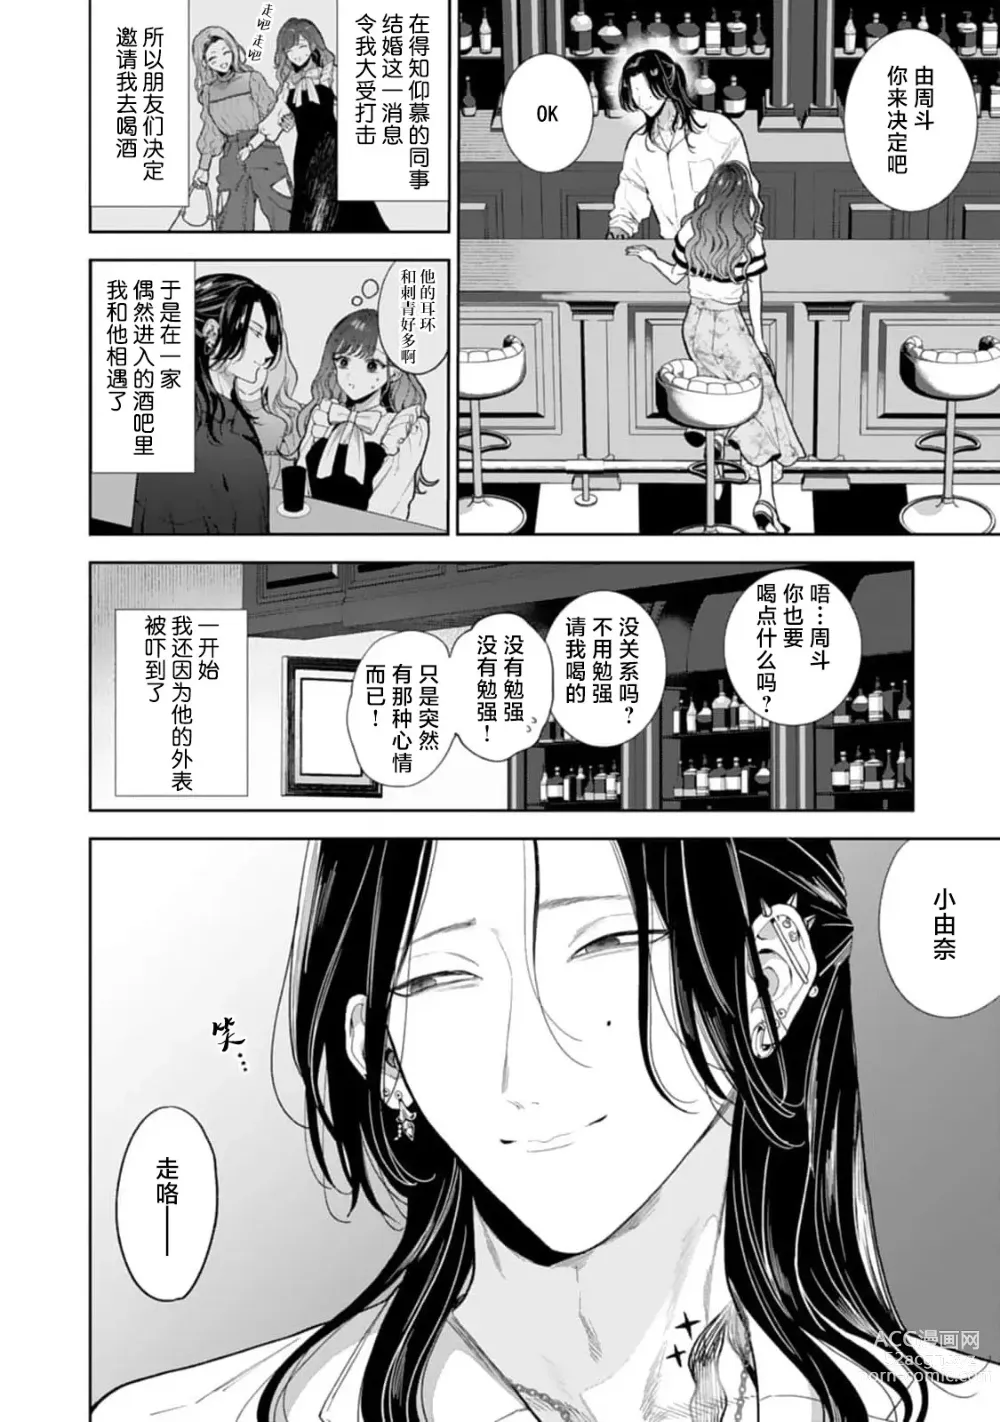 Page 3 of manga 执爱螺旋线